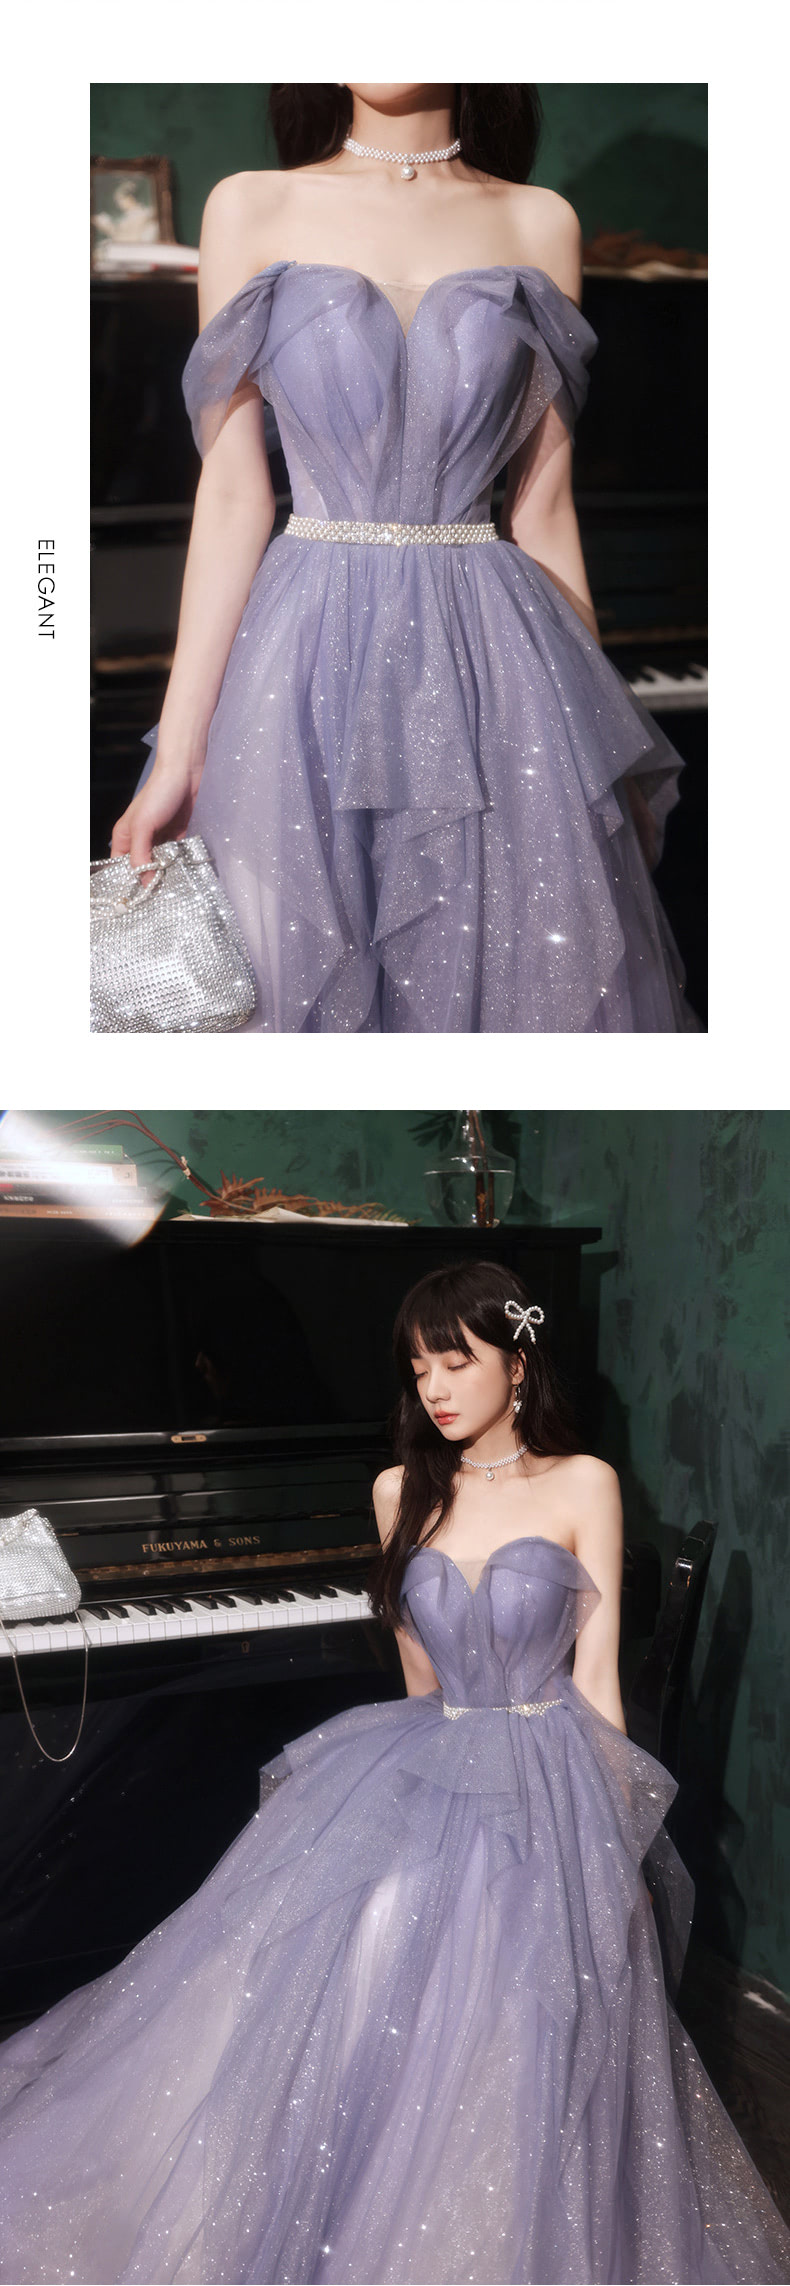 Elegant-Purple-Puffy-Ball-Gown-Evening-Formal-Homecoming-Dress11.jpg